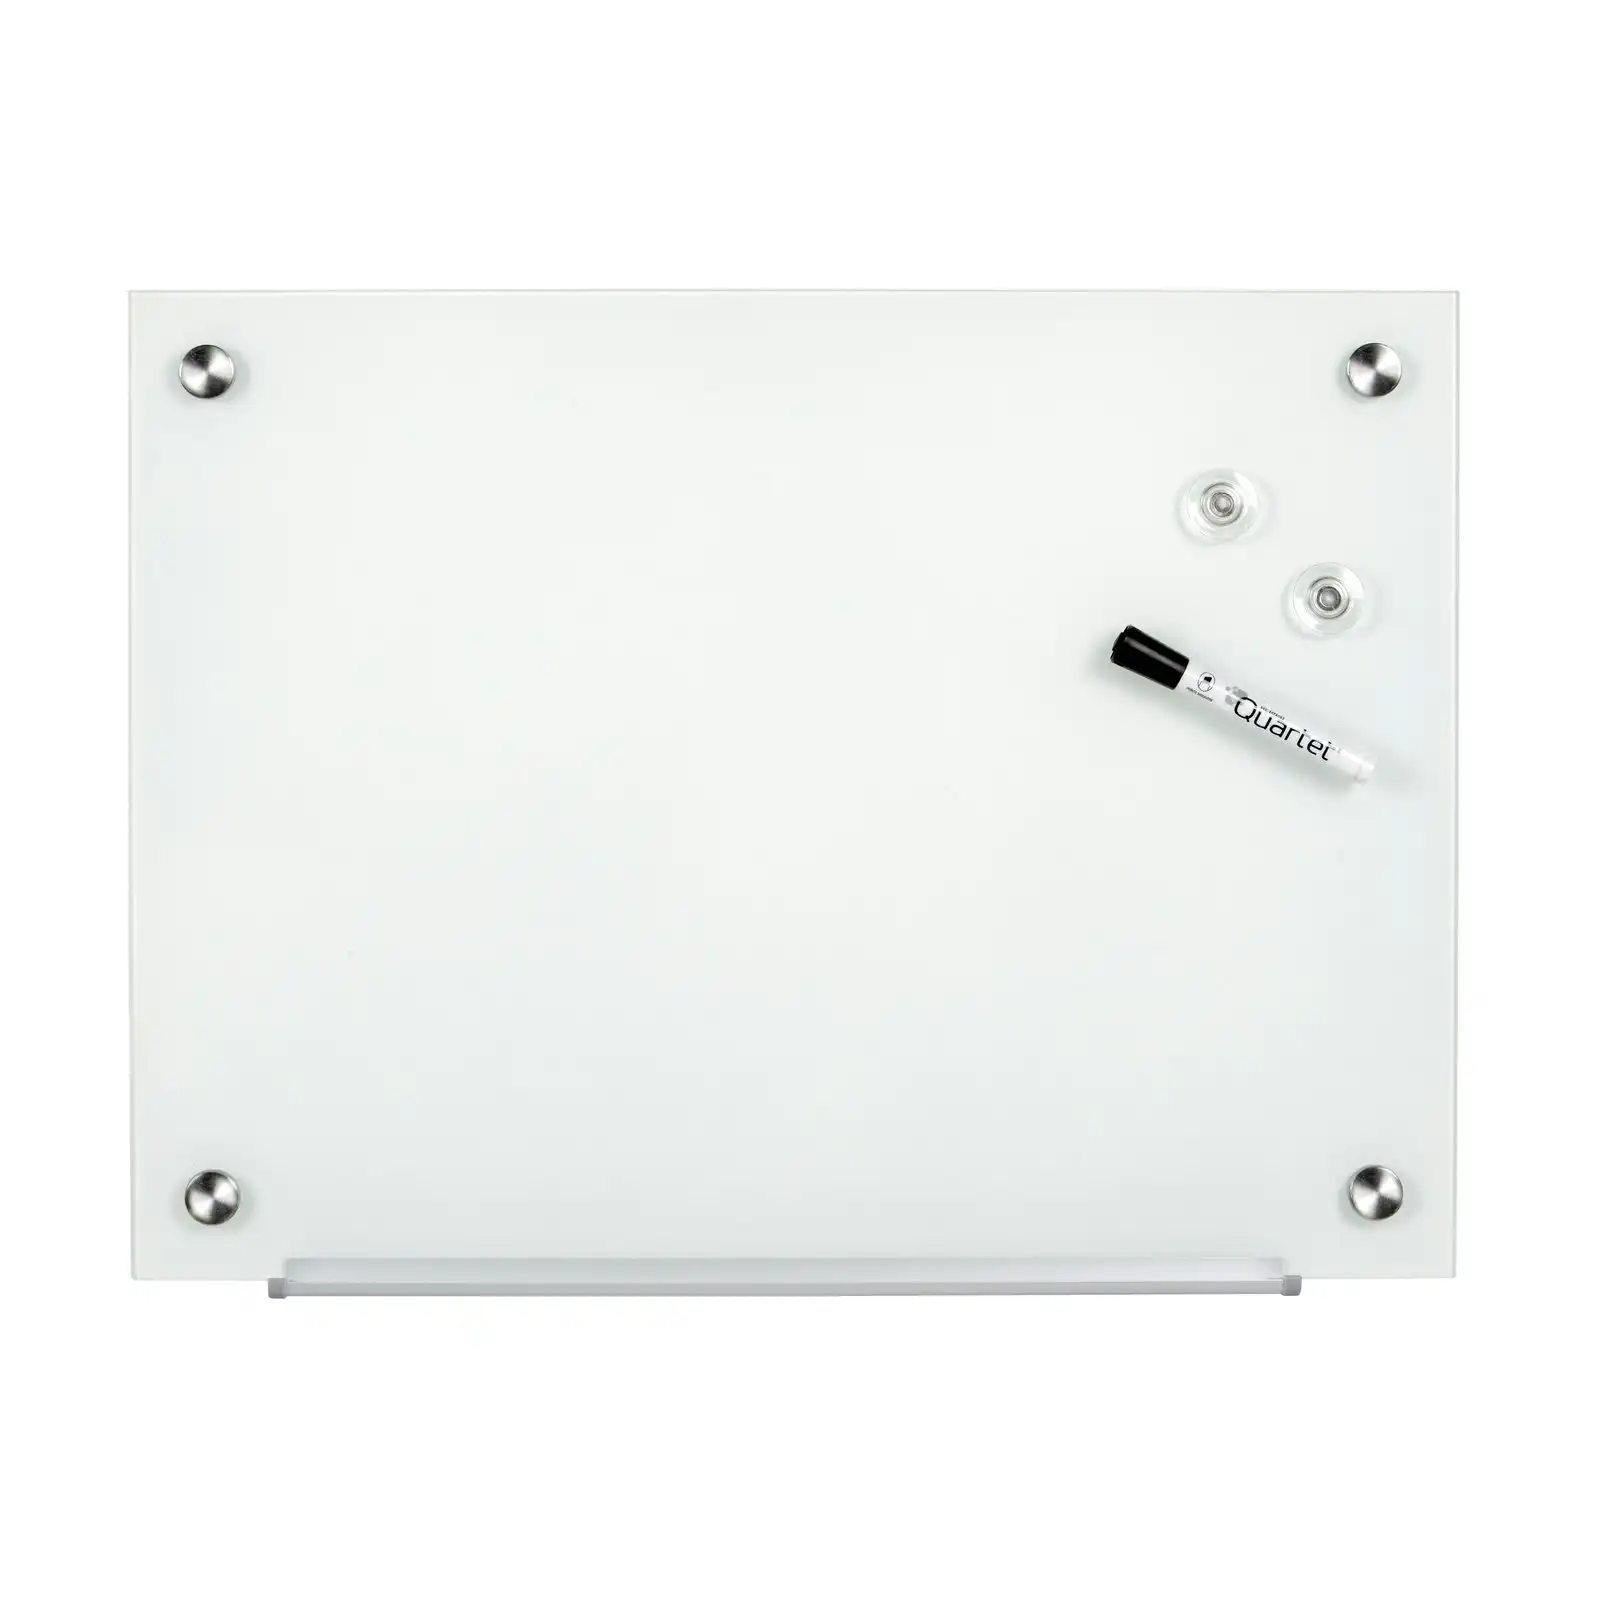 Quartet Frameless Magnetic 45x60cm Tempered Glass Office Board Dry-Erase Surface